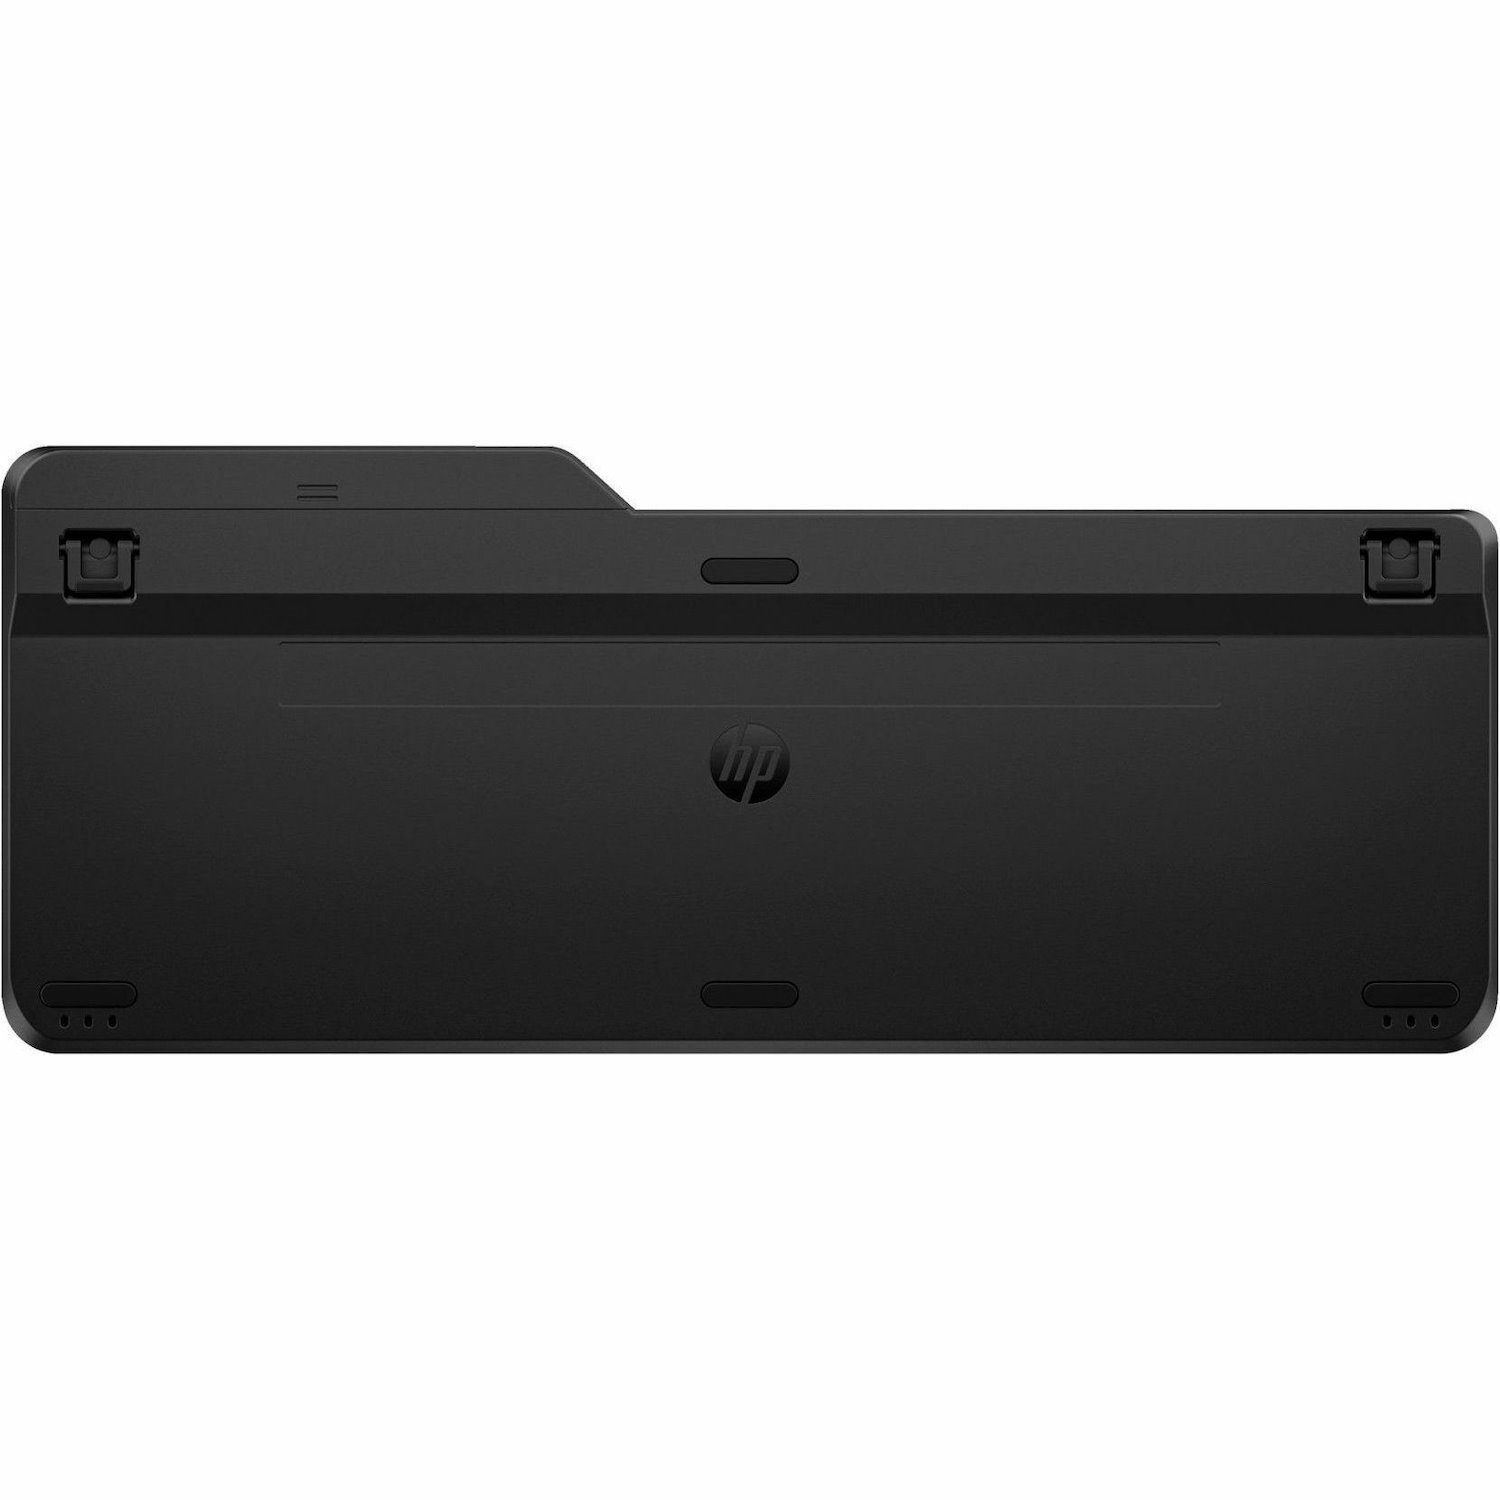 HP 475 Keyboard - Wireless Connectivity - USB Type A Interface - Jet Black